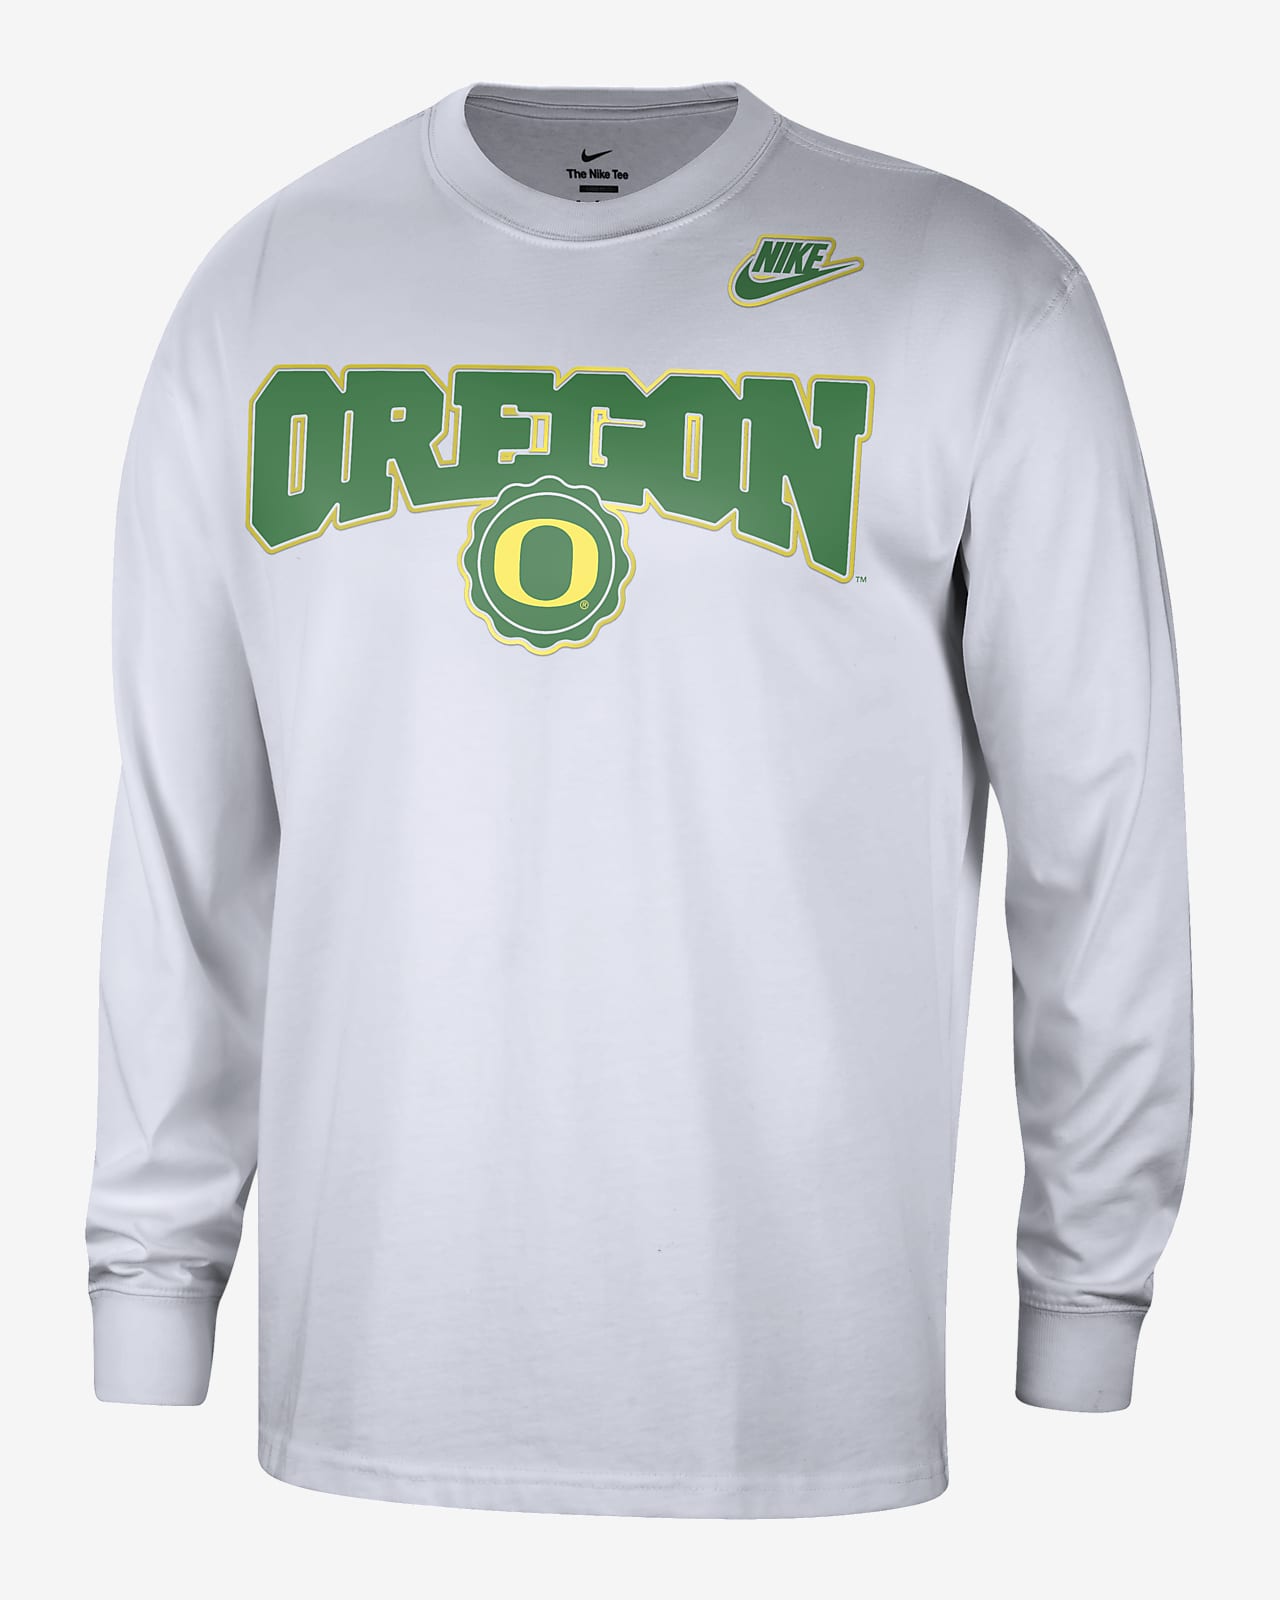 Nike College (Oregon) Basketball Jersey - White, L